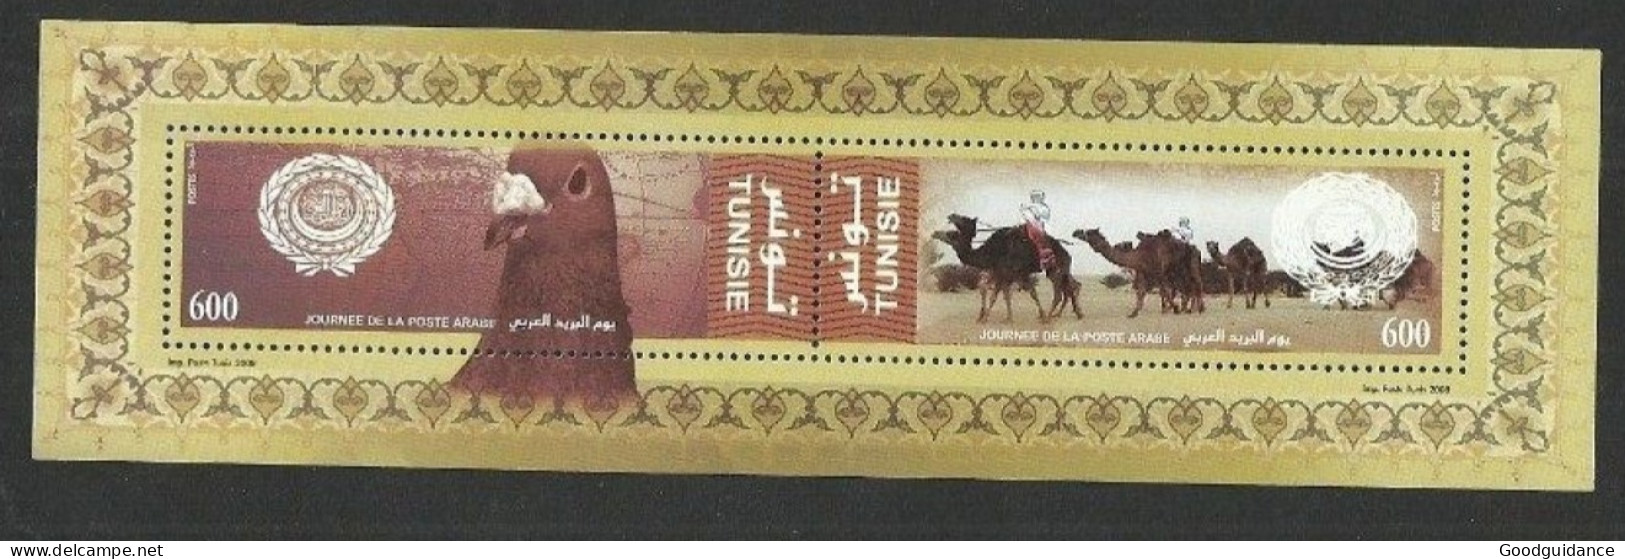 2008- Tunisia-  Minisheet  - Arab Post Day 2008 - Bird - Camel - Desert - MNH** - Emisiones Comunes